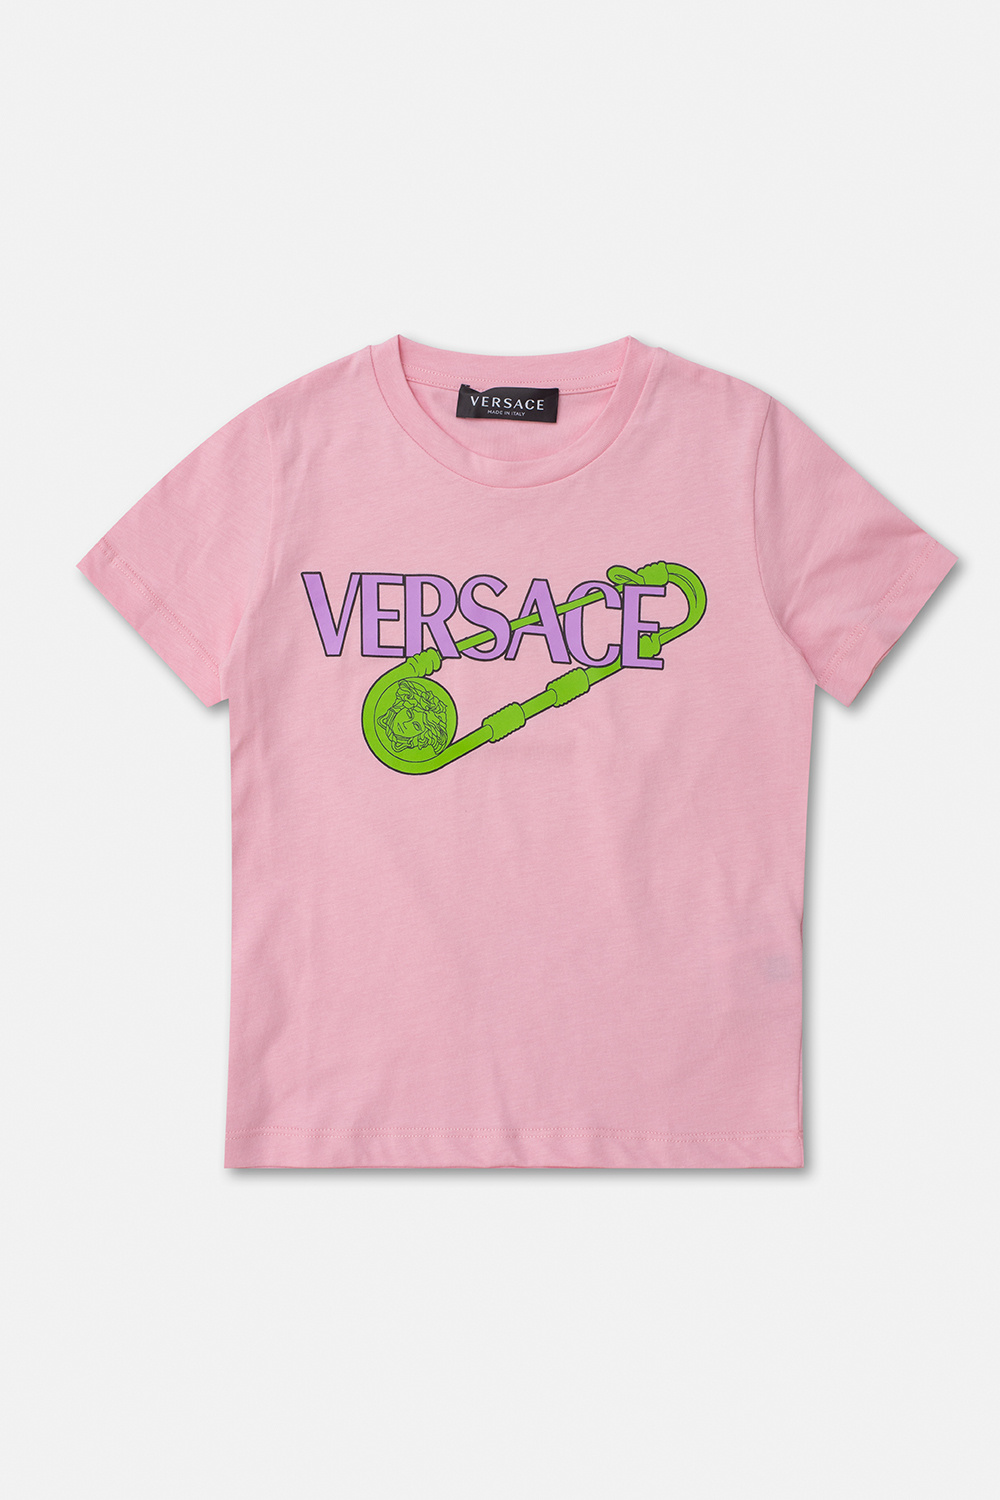 Versace Kids Printed T-shirt